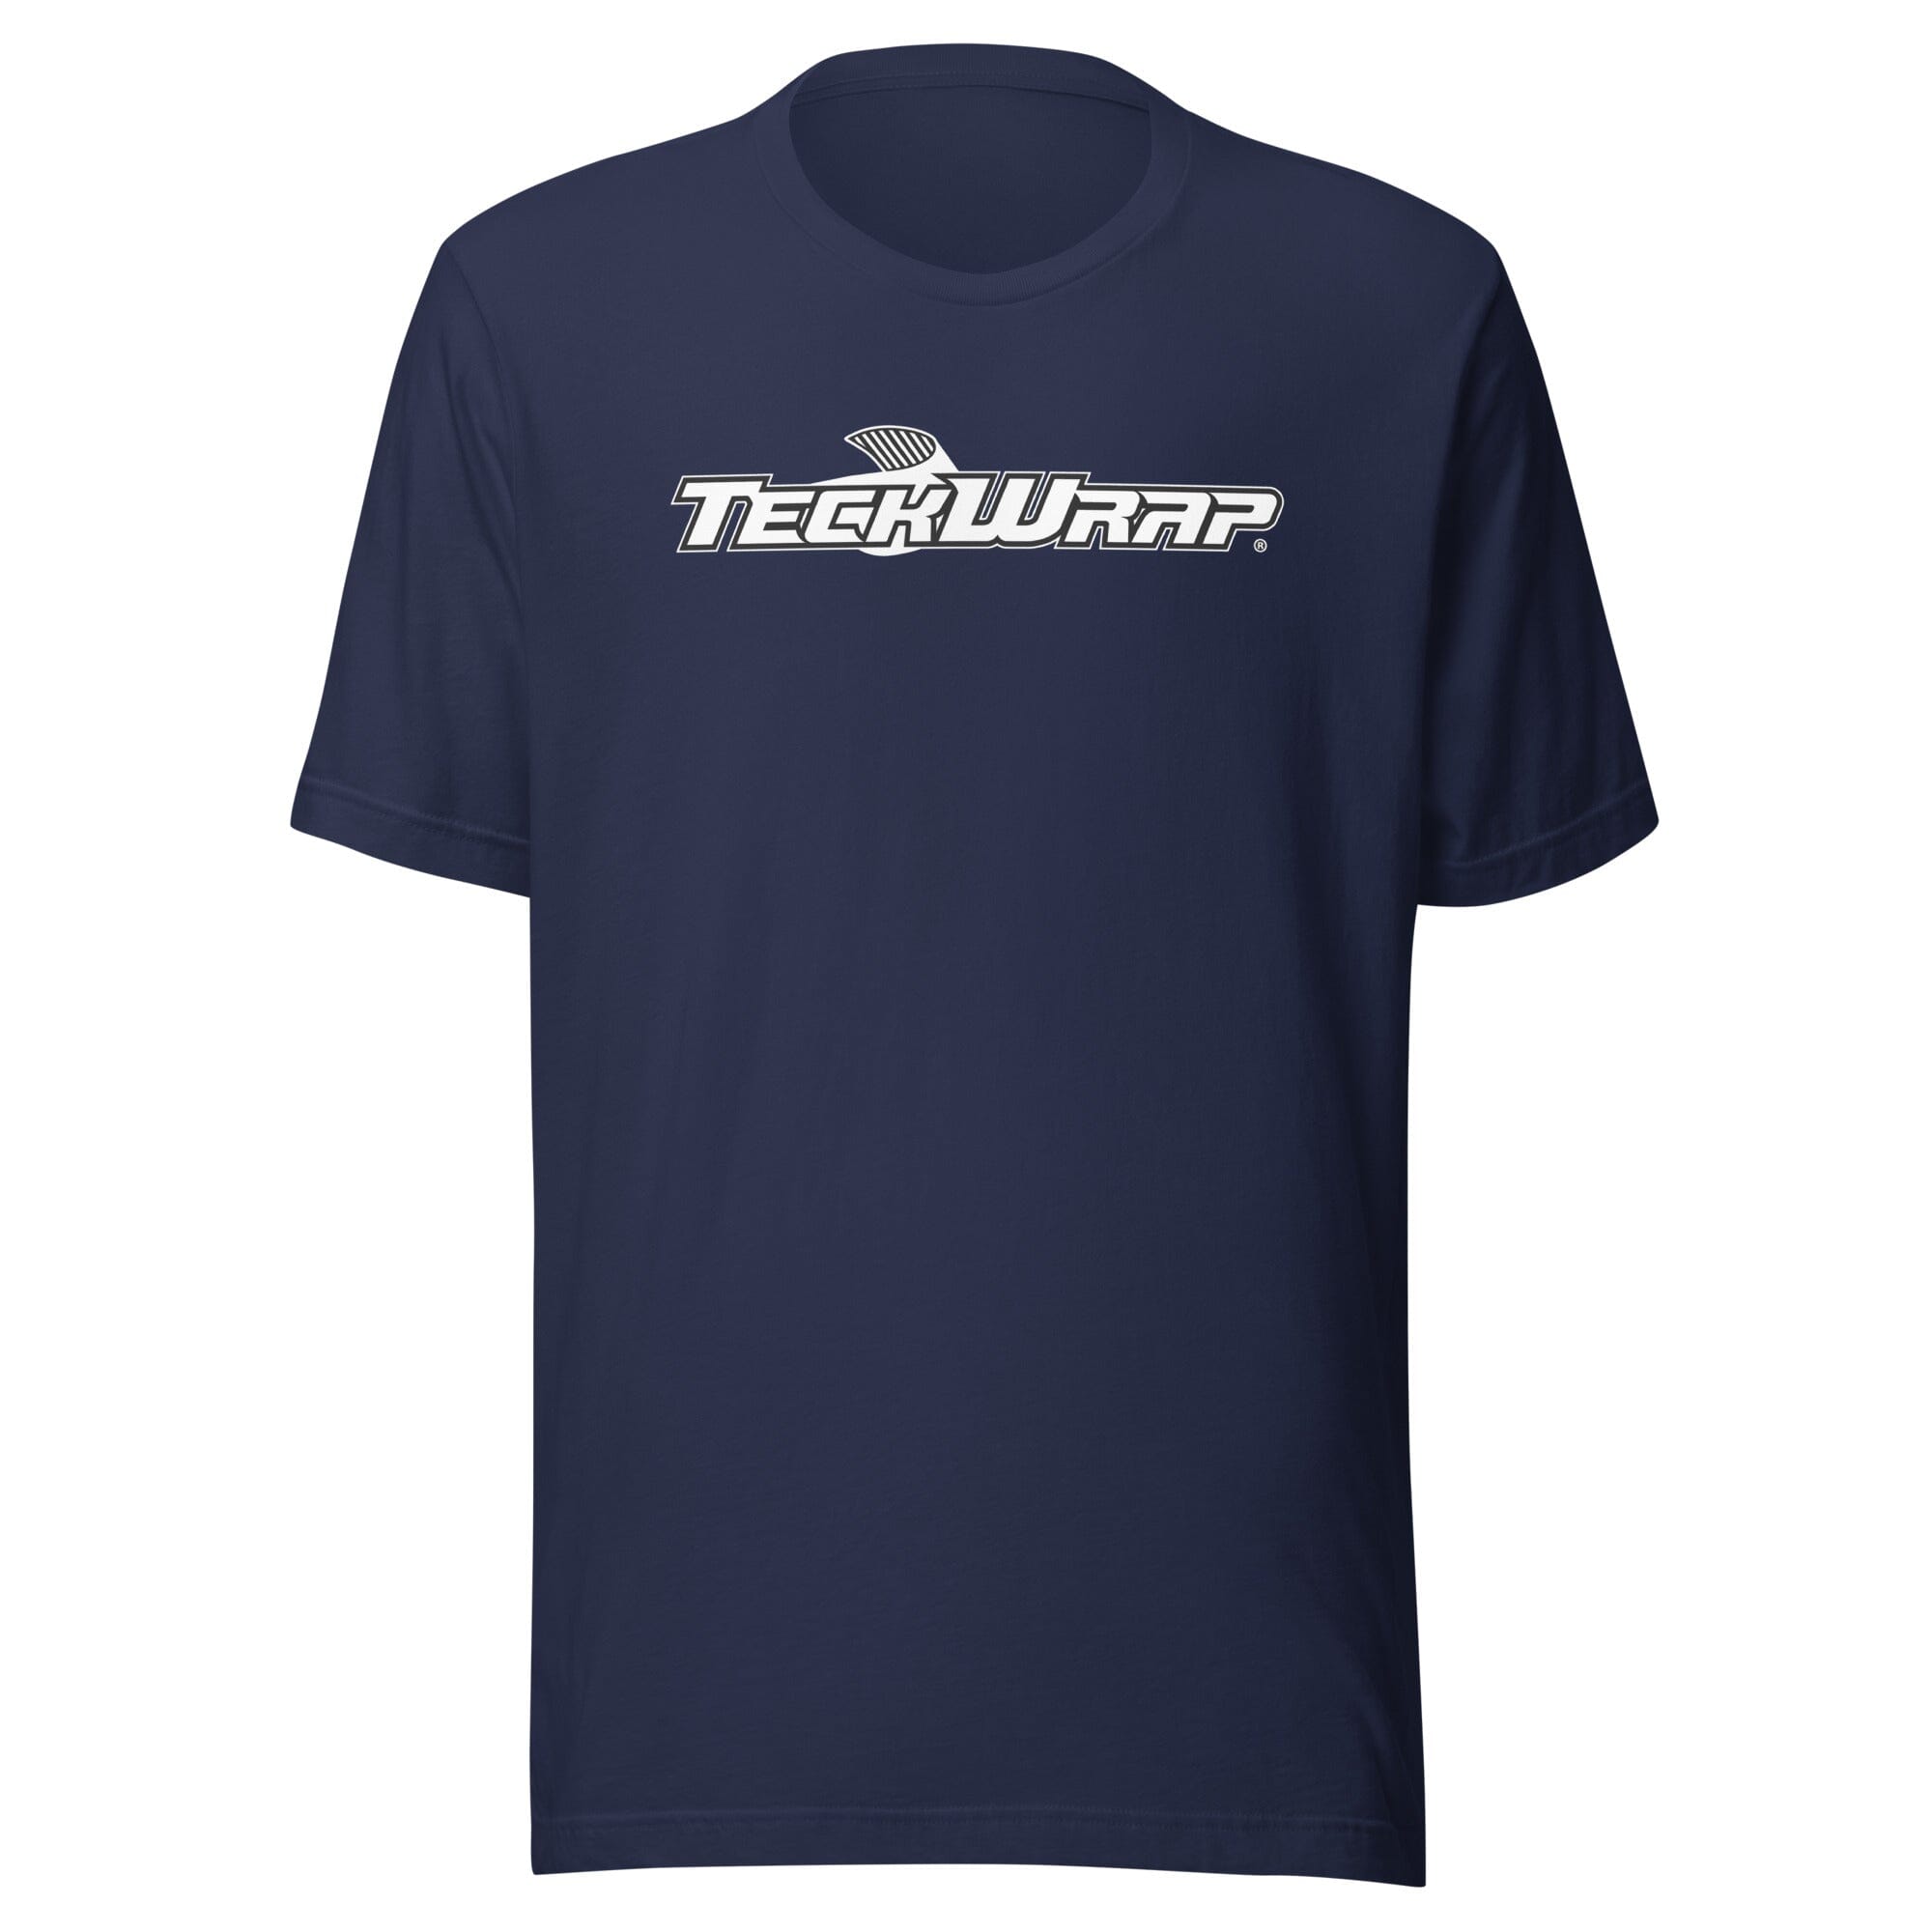 Teckwrap Unisex t-shirt Teckwrap USA Navy XS 